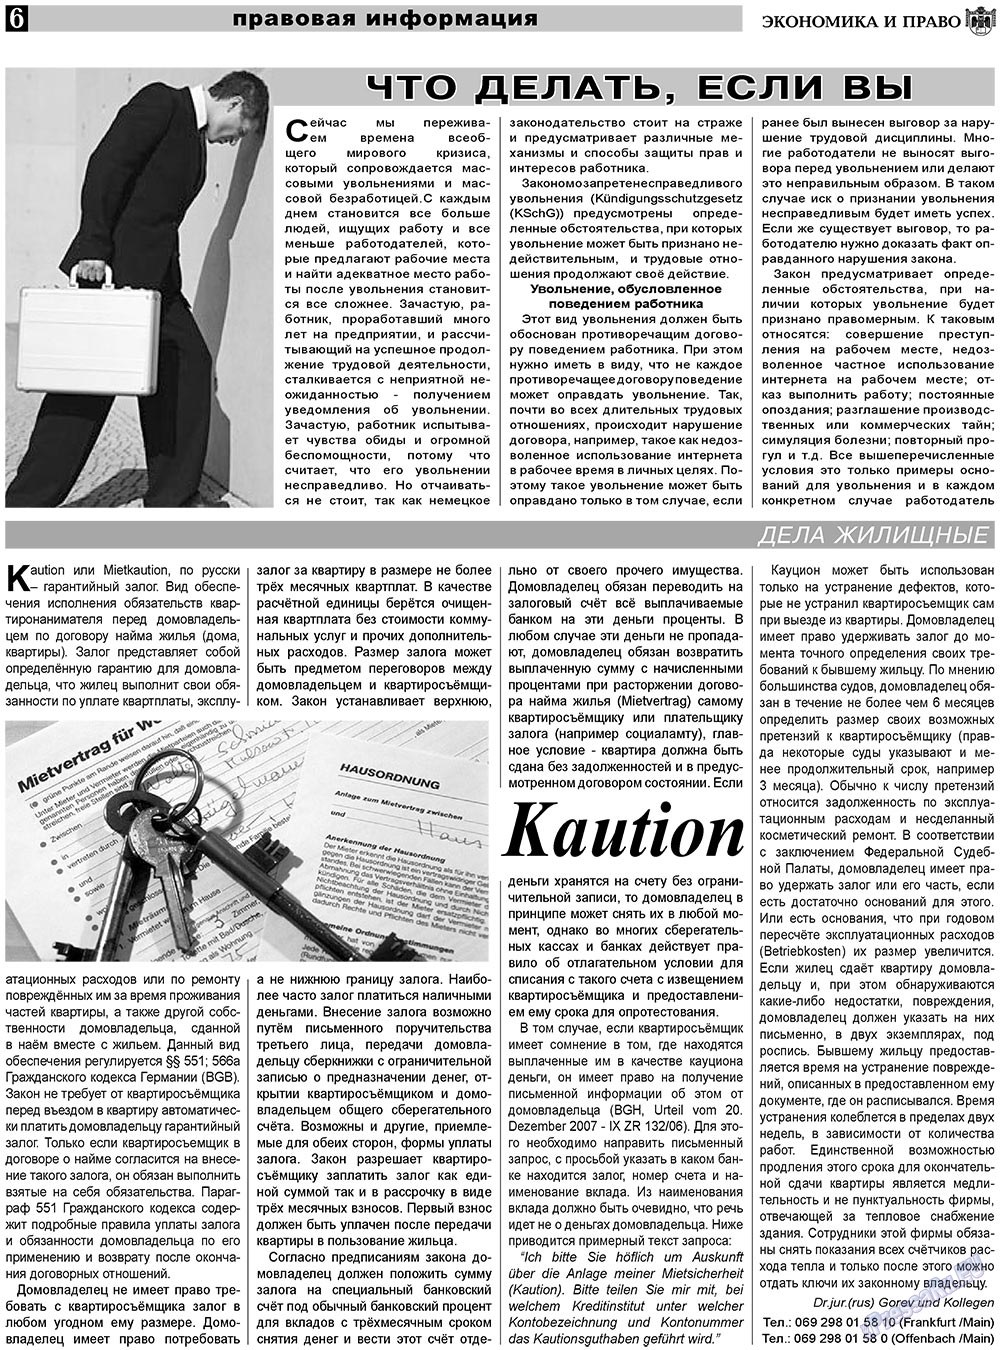 Ekonomika i pravo (Zeitung). 2010 Jahr, Ausgabe 11, Seite 6